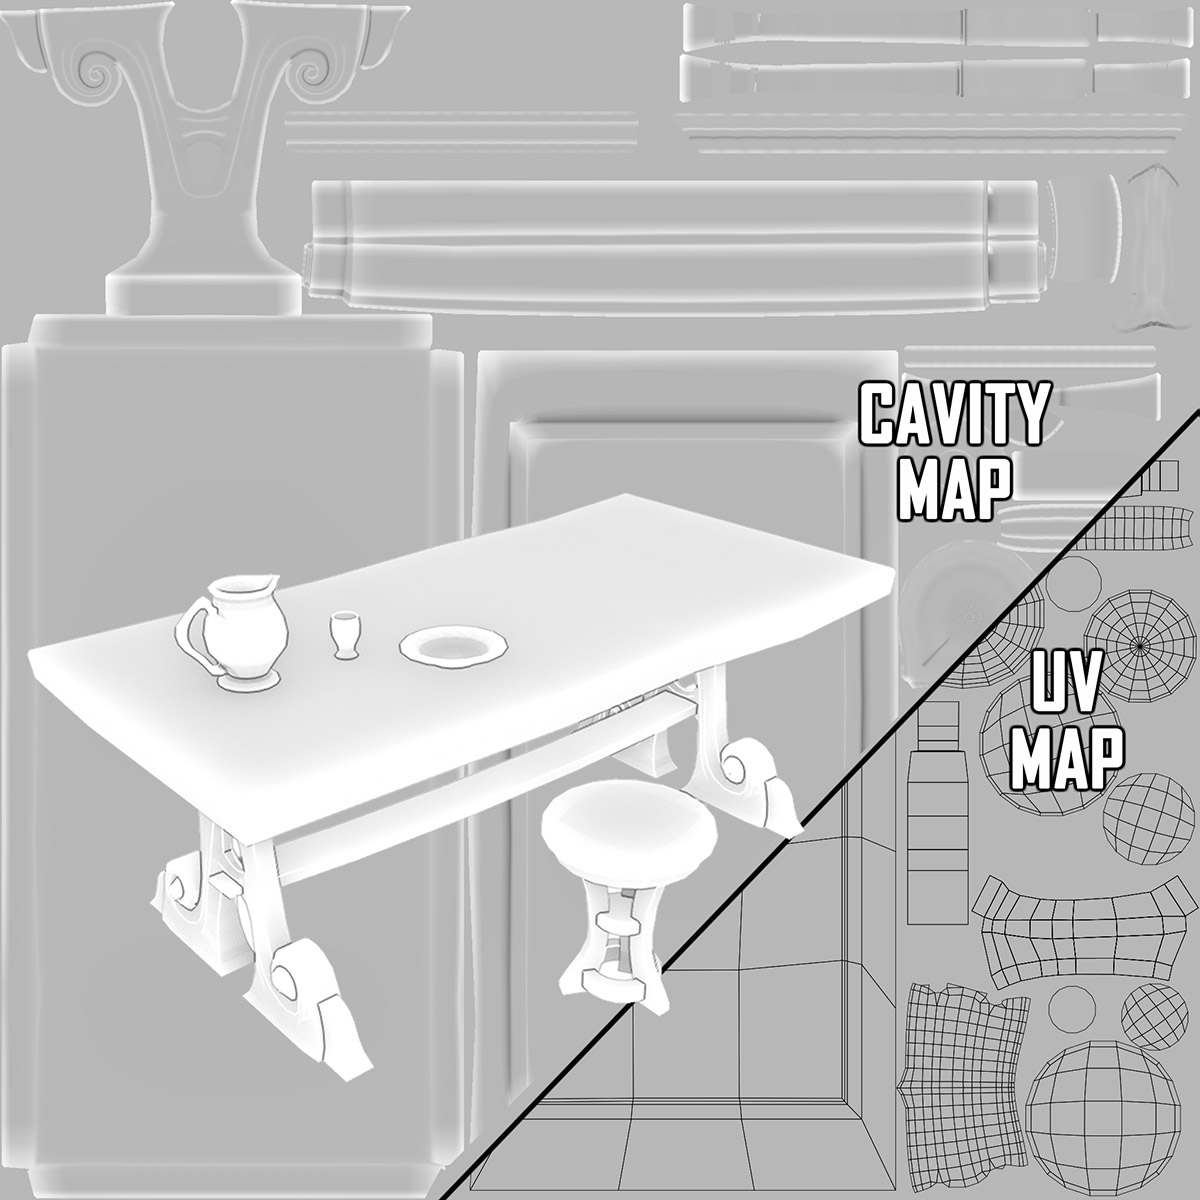 Blender Cavity Map